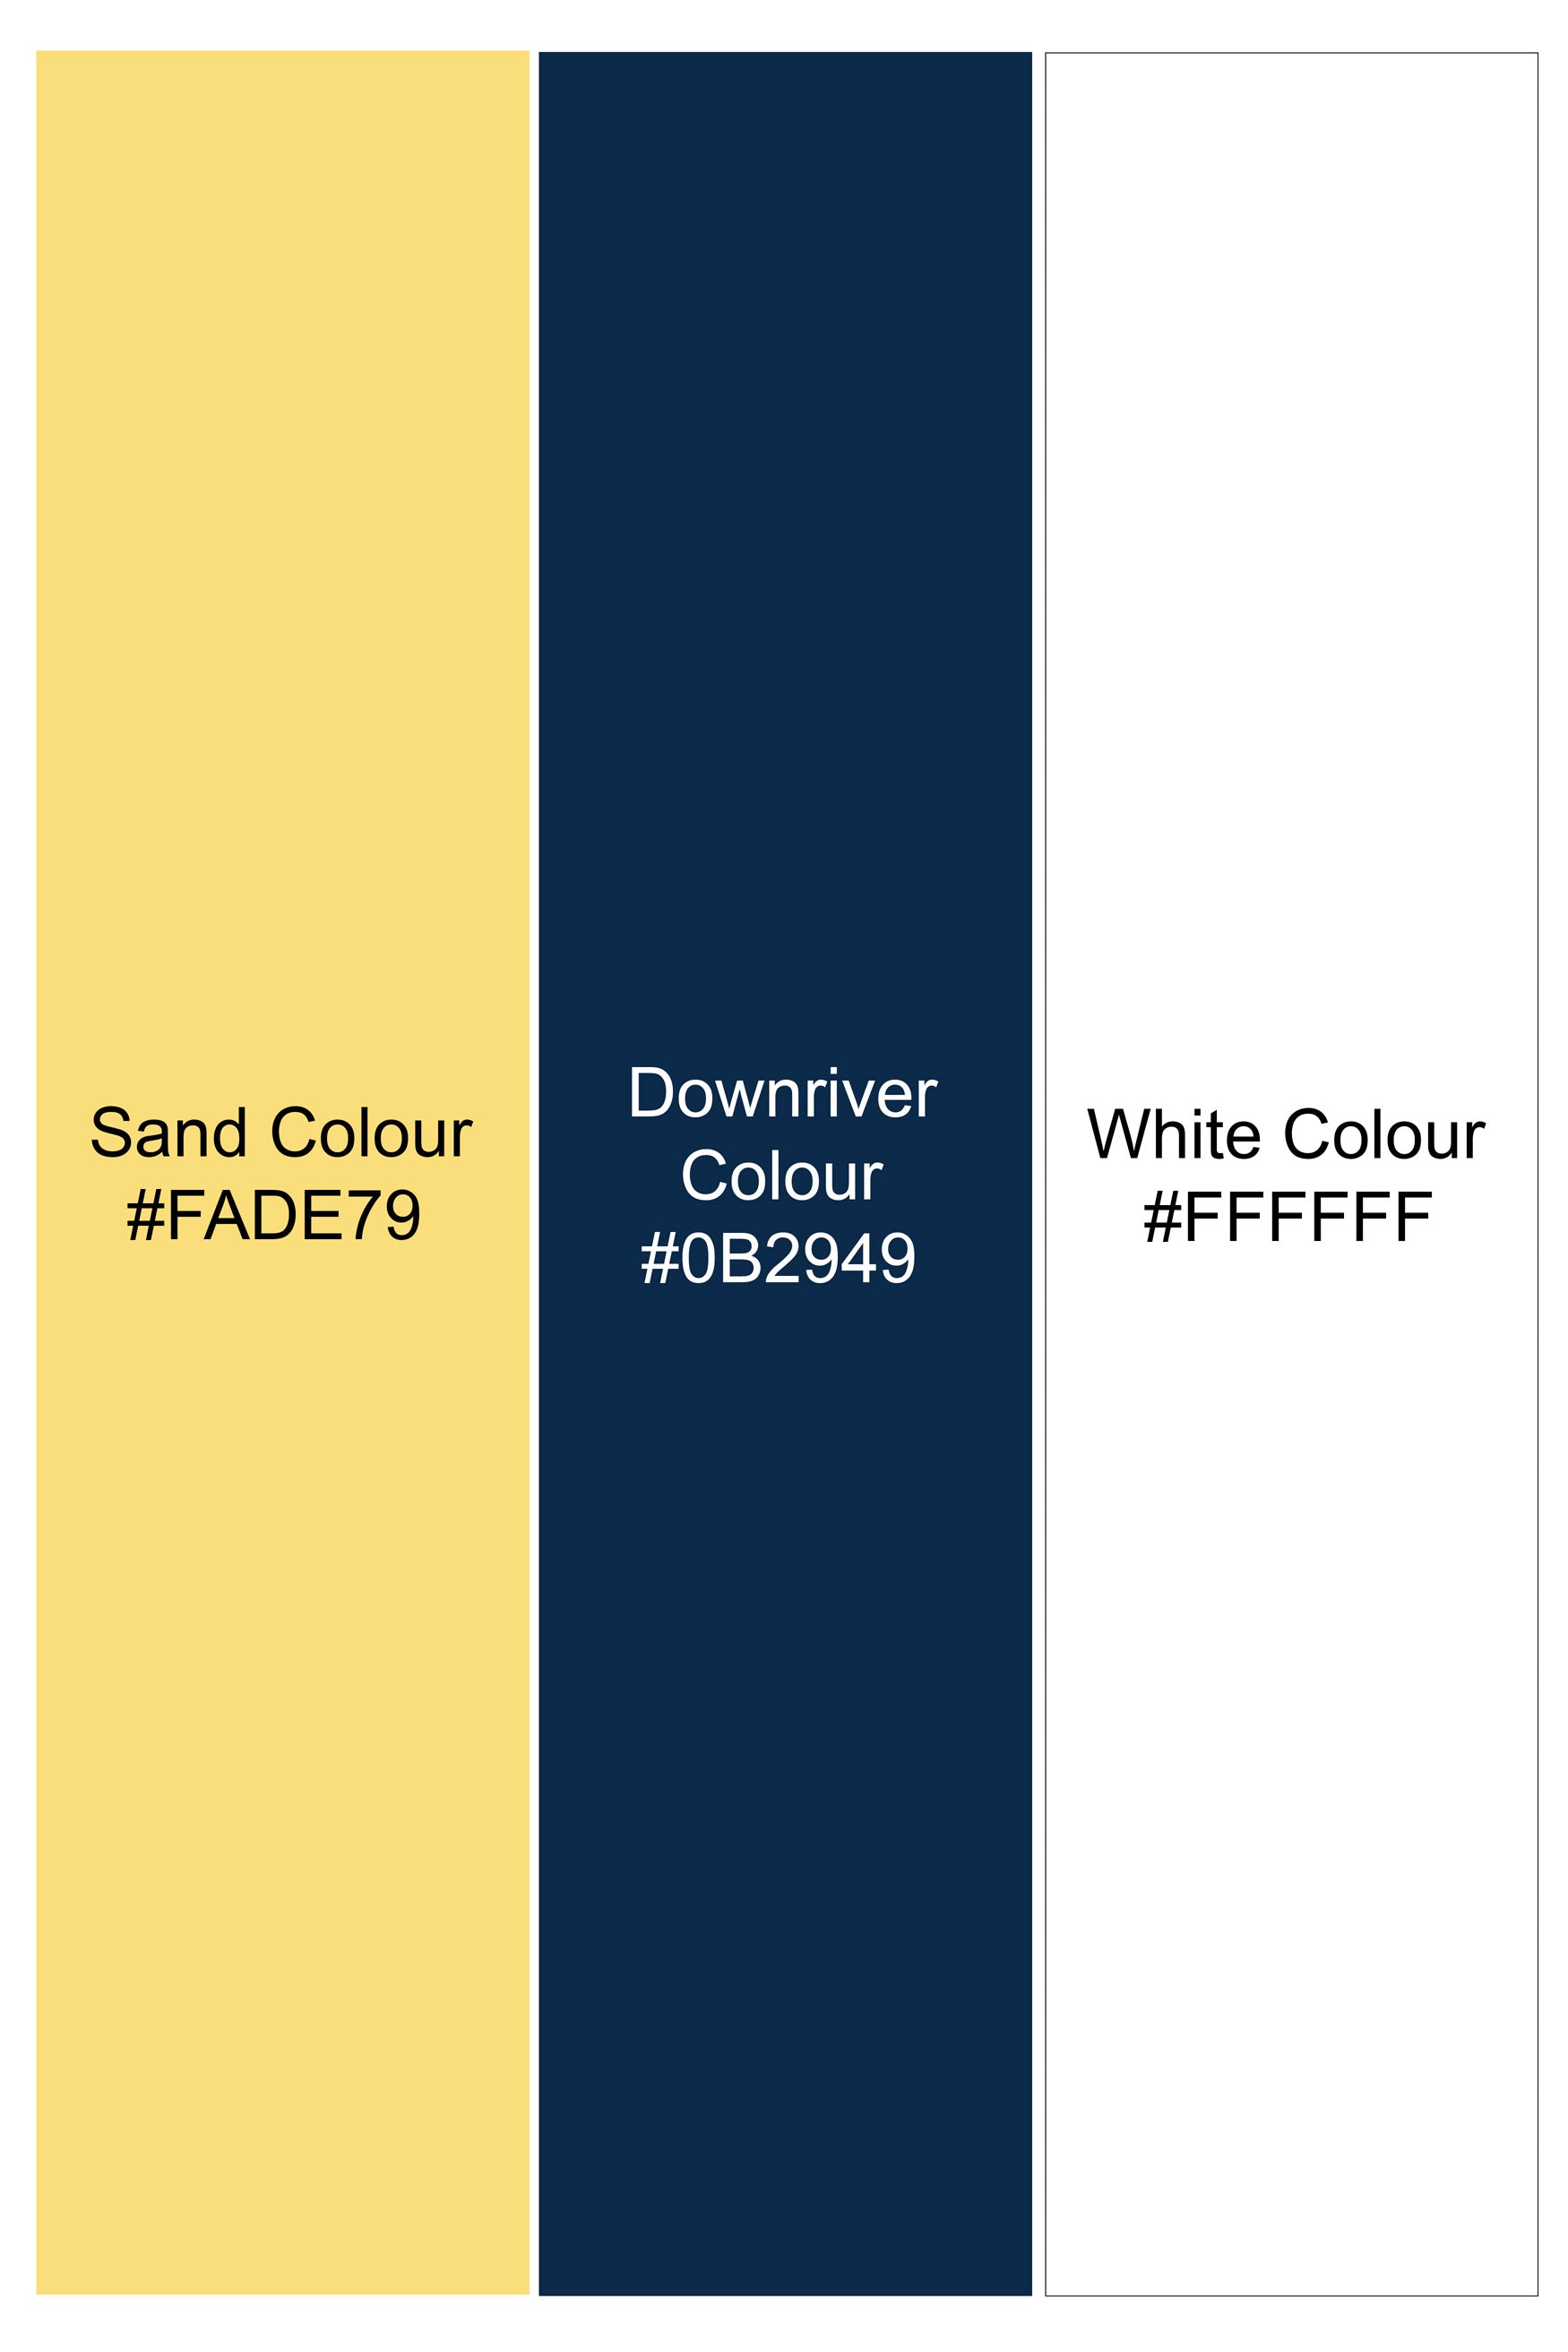 Sand Yellow and Downriver Blue Twill Plaid Premium Cotton Shirt 11679-BLE-38, 11679-BLE-H-38, 11679-BLE-39, 11679-BLE-H-39, 11679-BLE-40, 11679-BLE-H-40, 11679-BLE-42, 11679-BLE-H-42, 11679-BLE-44, 11679-BLE-H-44, 11679-BLE-46, 11679-BLE-H-46, 11679-BLE-48, 11679-BLE-H-48, 11679-BLE-50, 11679-BLE-H-50, 11679-BLE-52, 11679-BLE-H-52